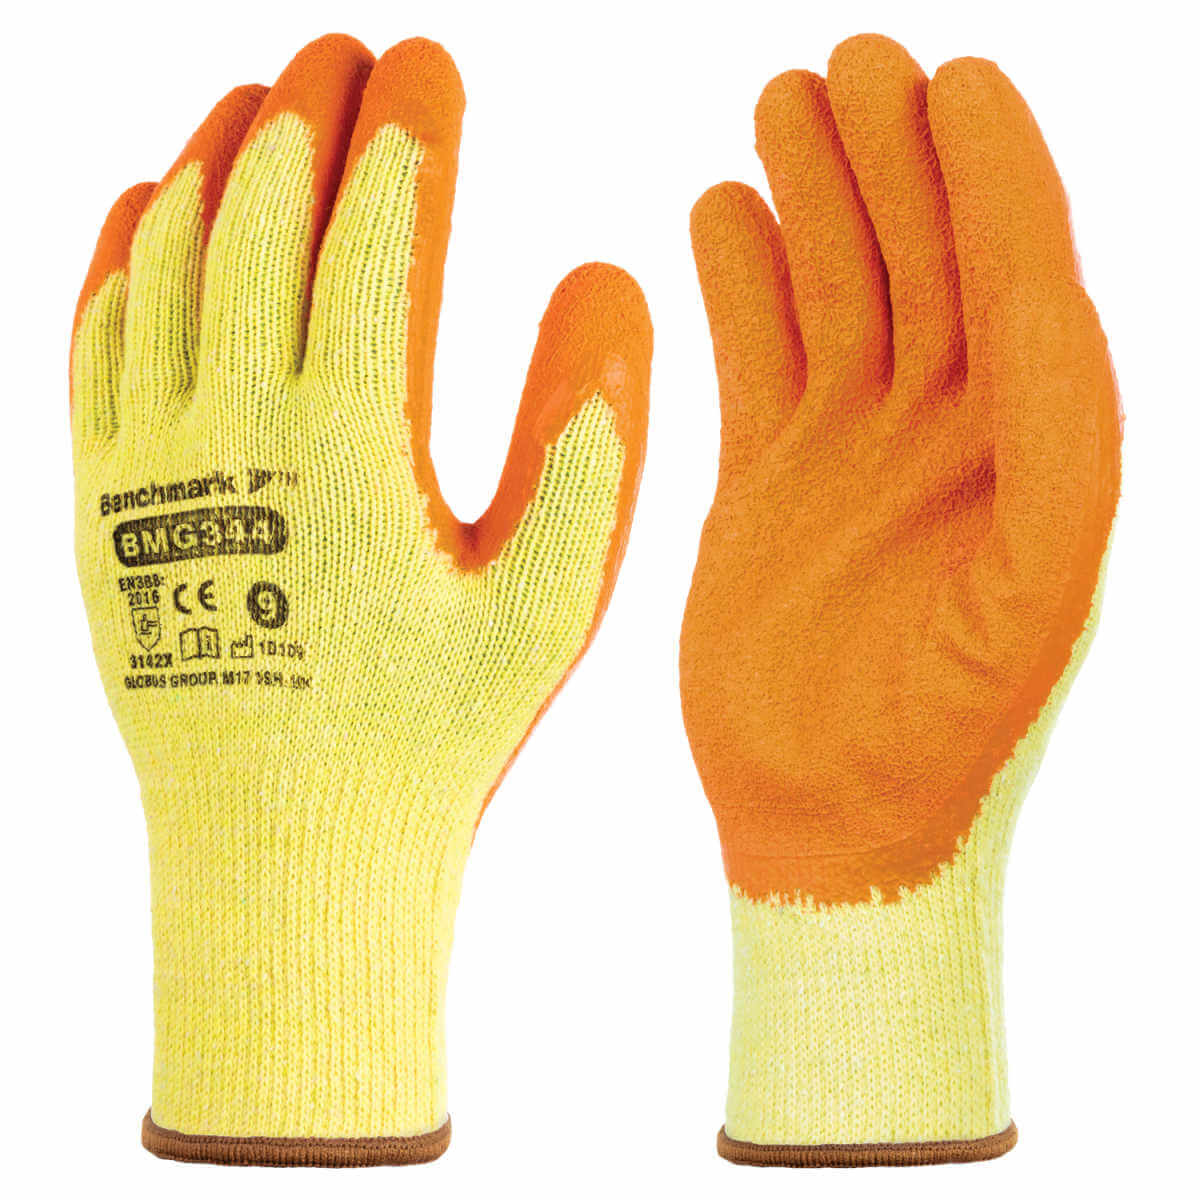 Benchmark BMGR344 Cotton/Crinkle Latex Grip Gloves